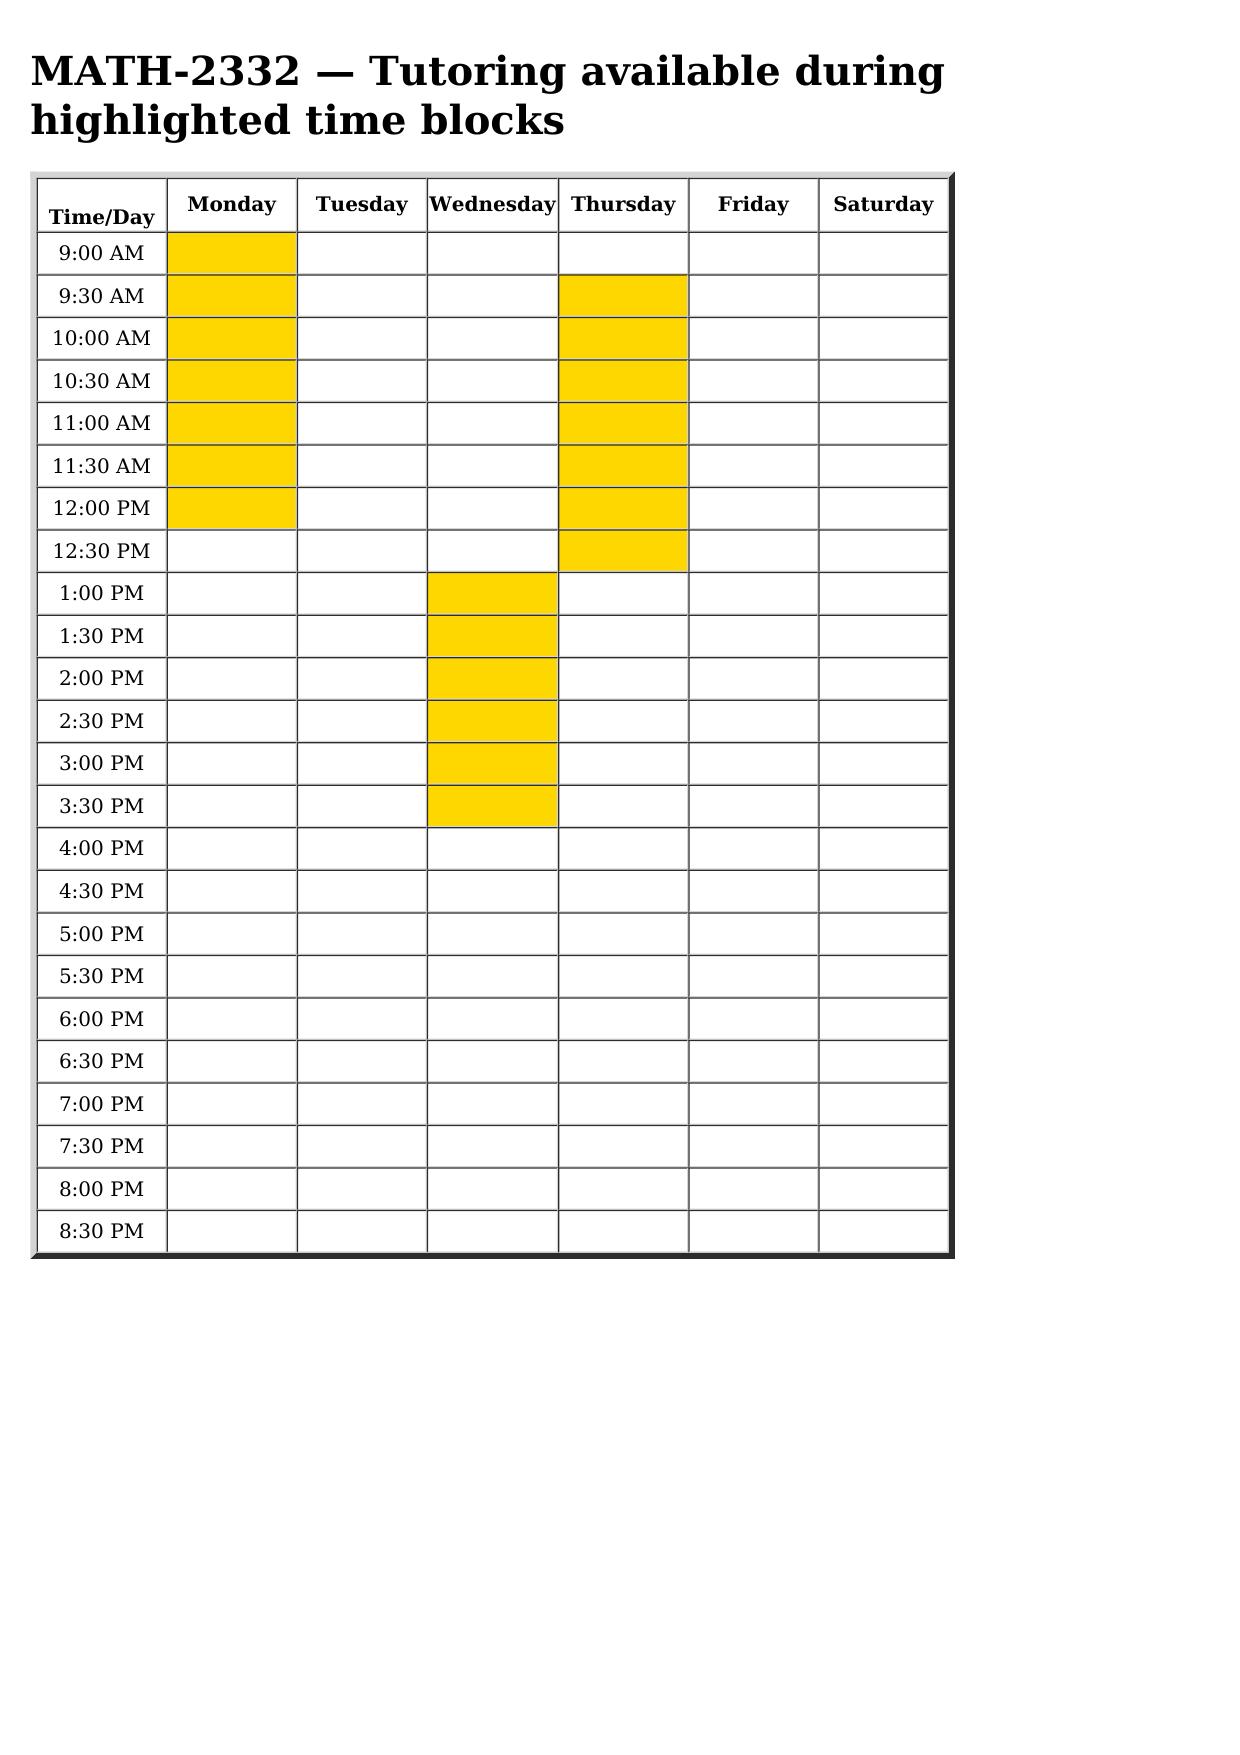 math 2332 schedule